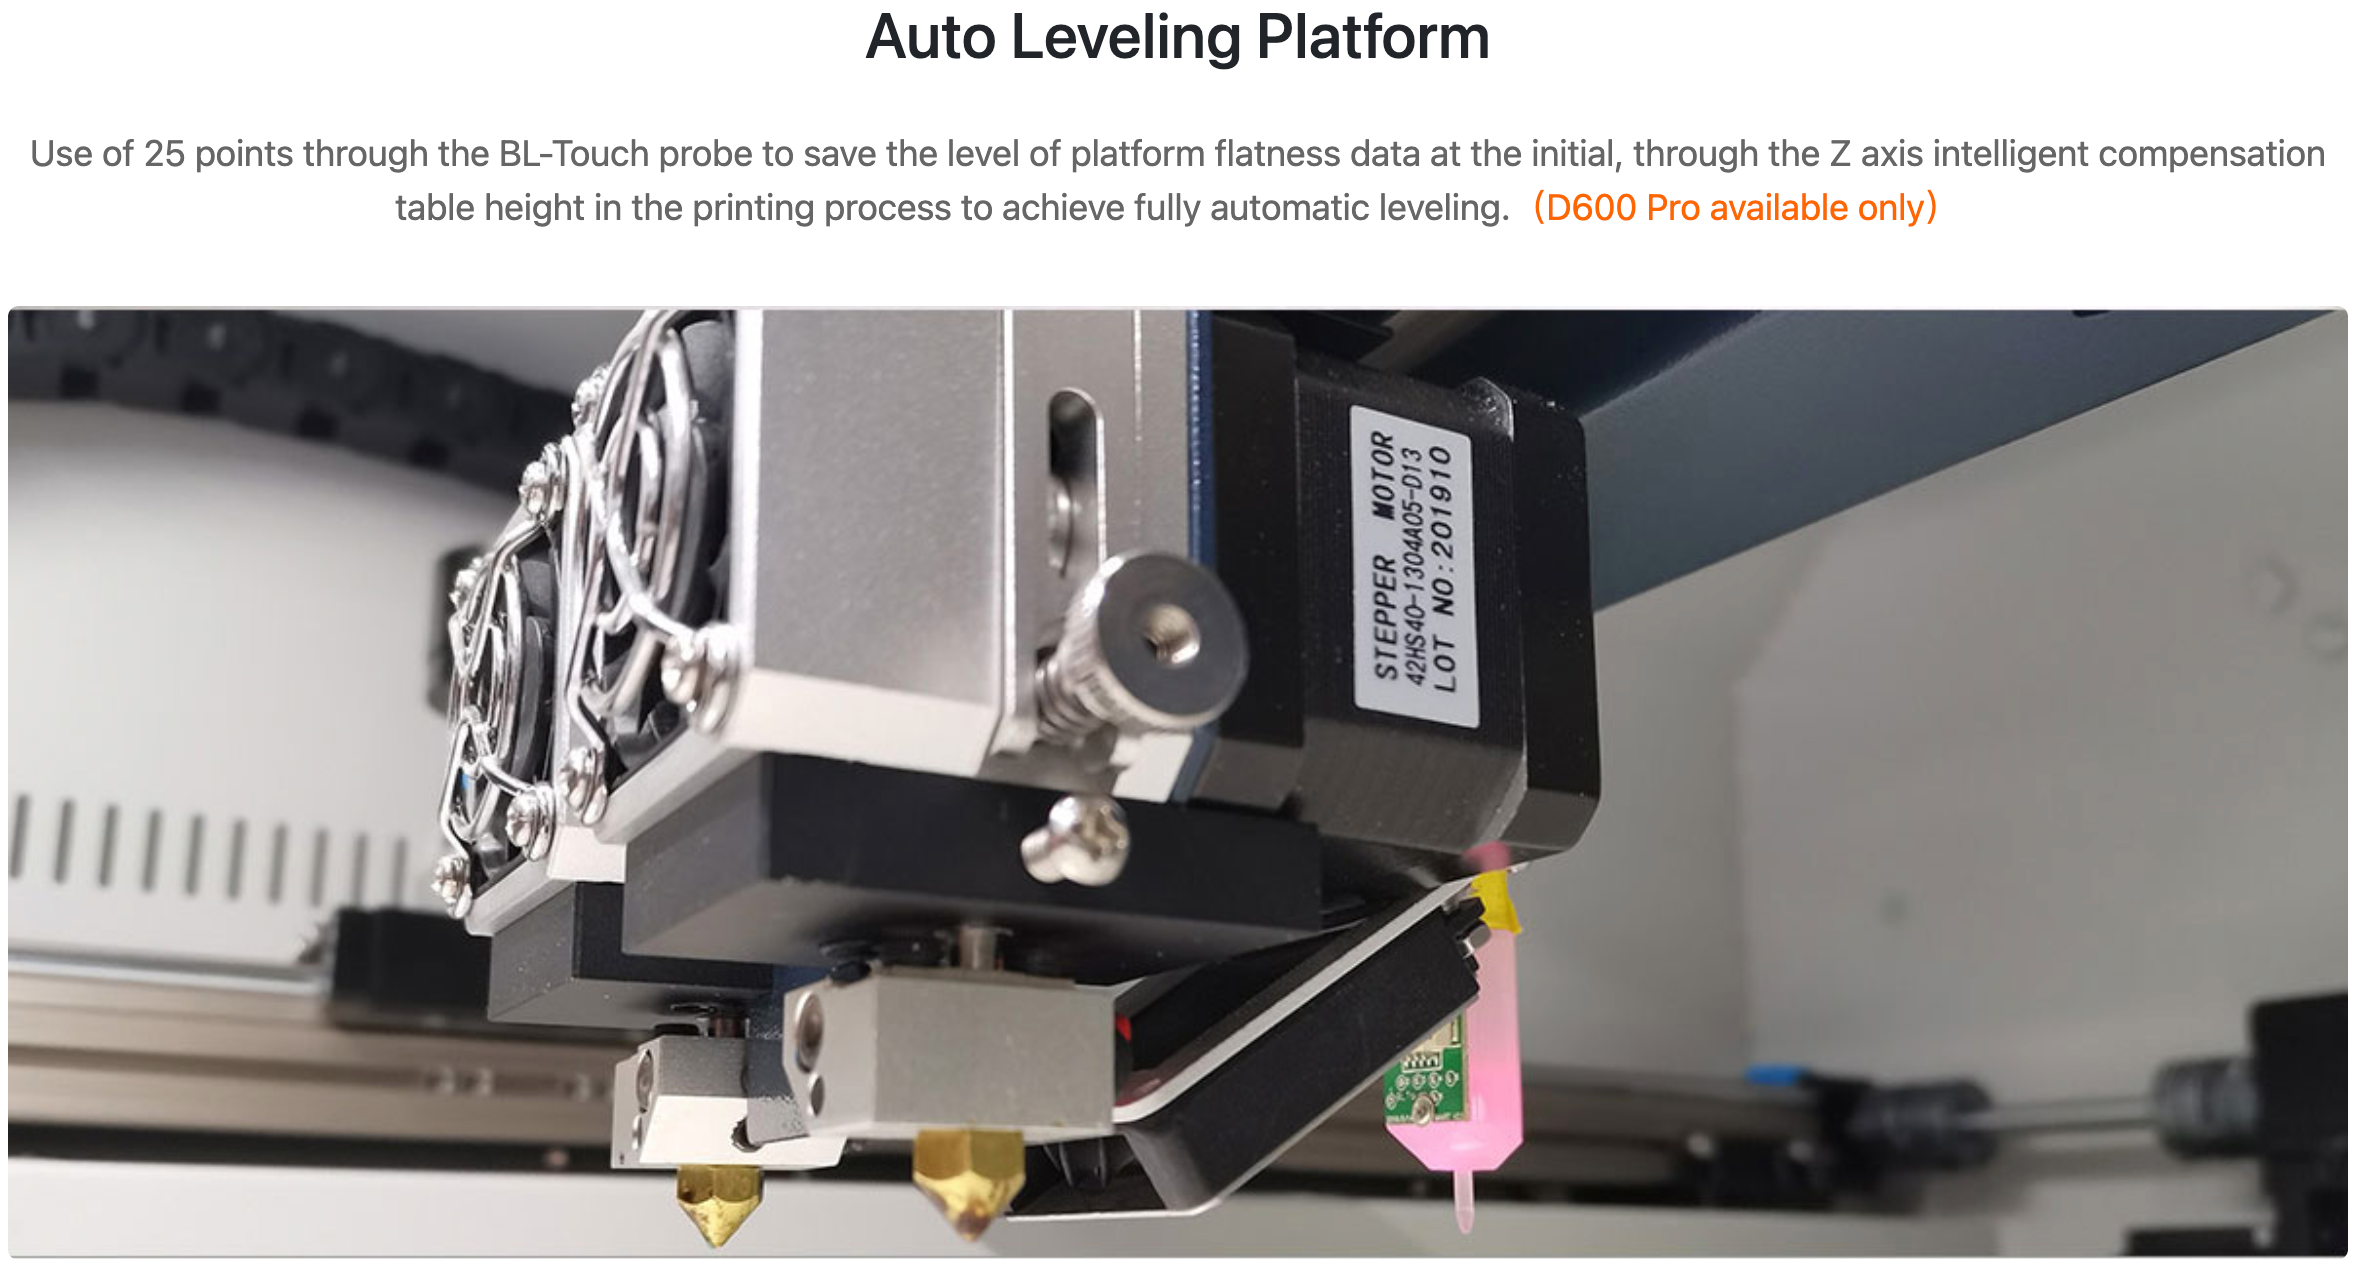 SUNLU 3D Printer Electronic Bed Leveling Tool, 4 Batteries, 3D Printer Bed  Leveling Sensor Kit for FDM Printer, Precise Leveling, Efficiency 3D  Printer Accessories, 3D Printing Leveler, 2 Packs Black: :  Industrial